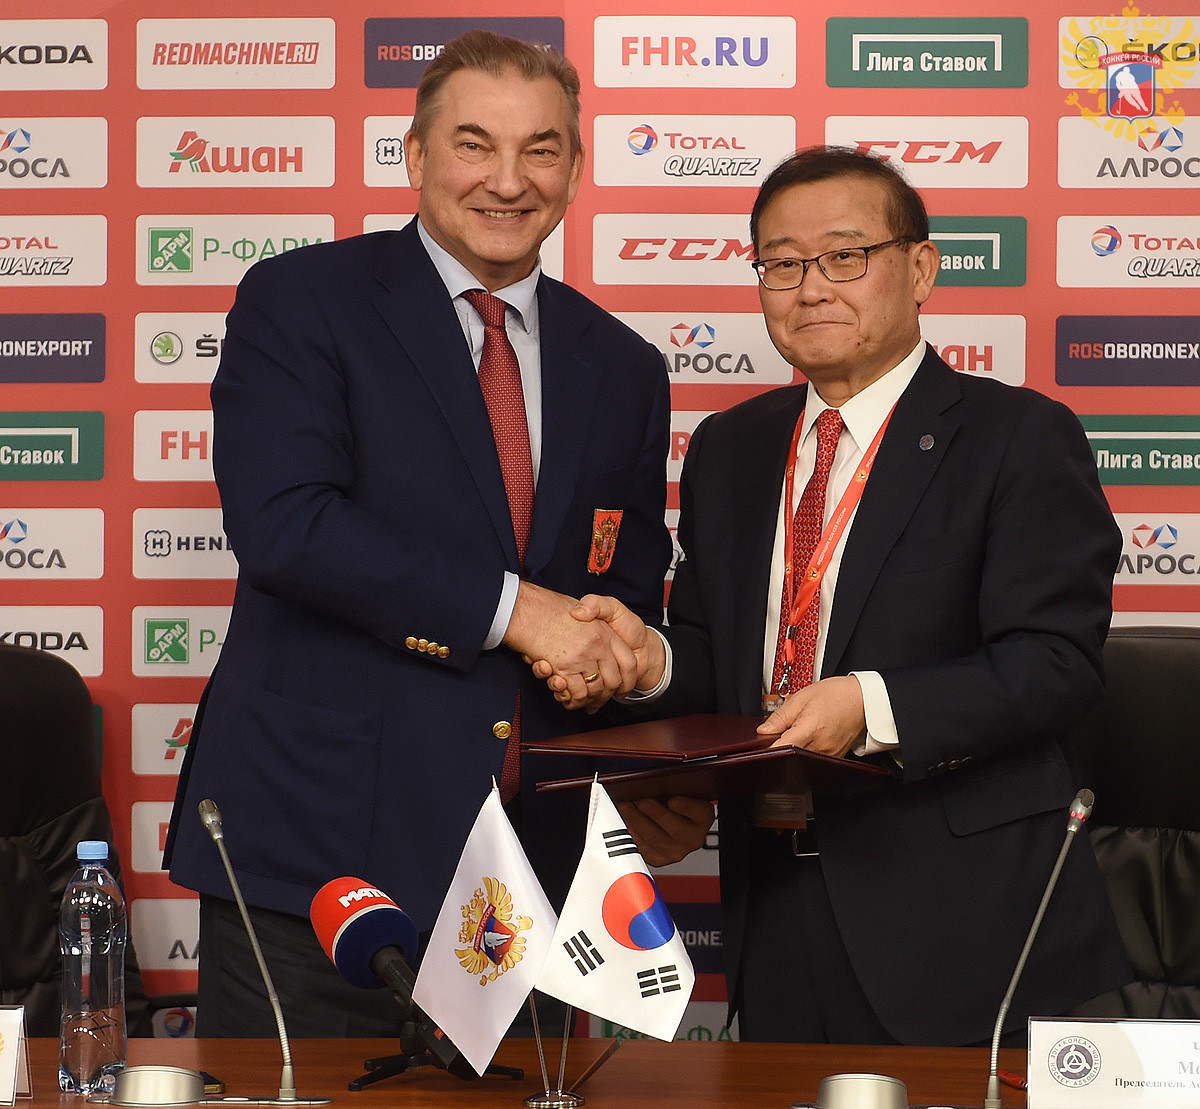 South Korea to face Russia in final Pyeongchang 2018 warm up game